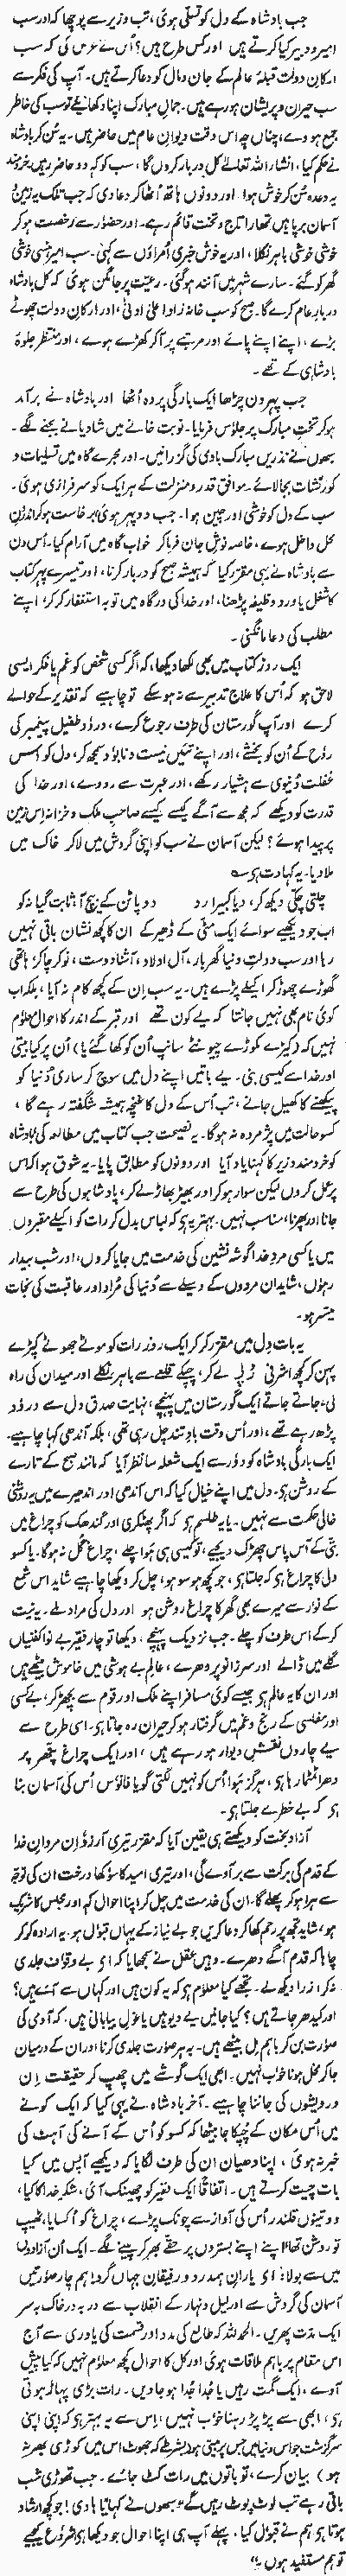 Urdu text as giff image (Size 64 KB)